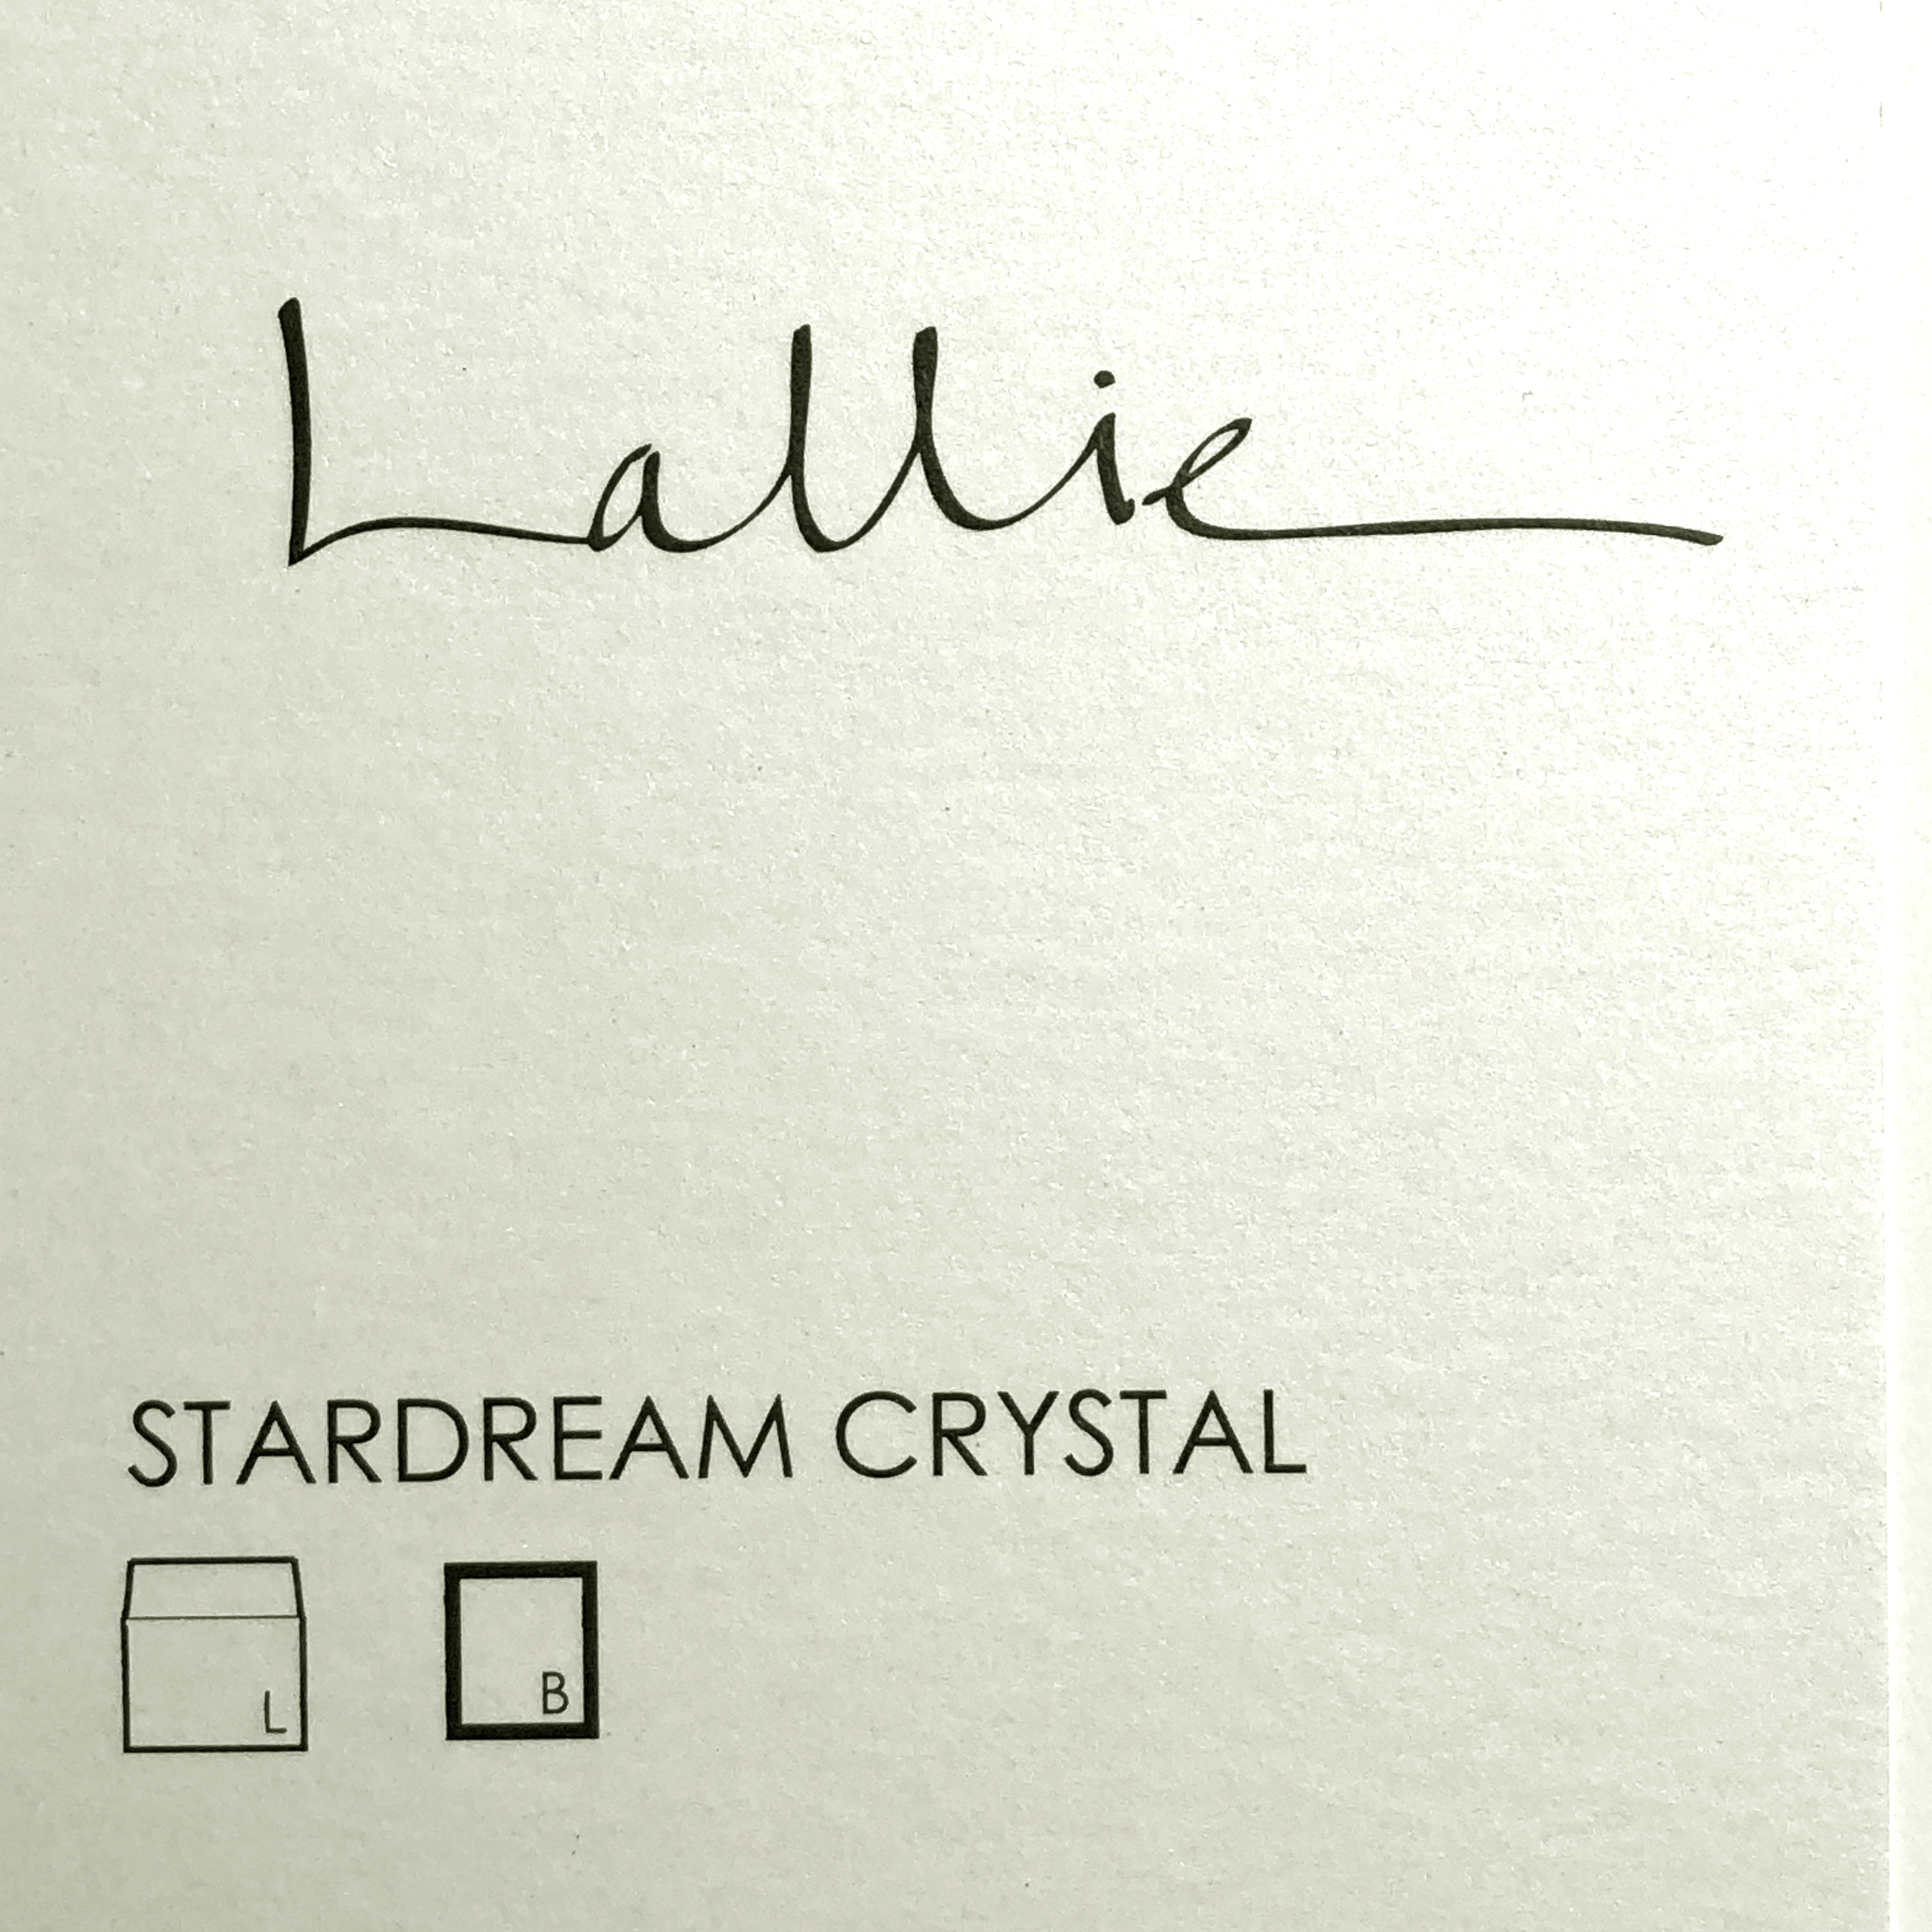 Stardream Crystal (metallic)